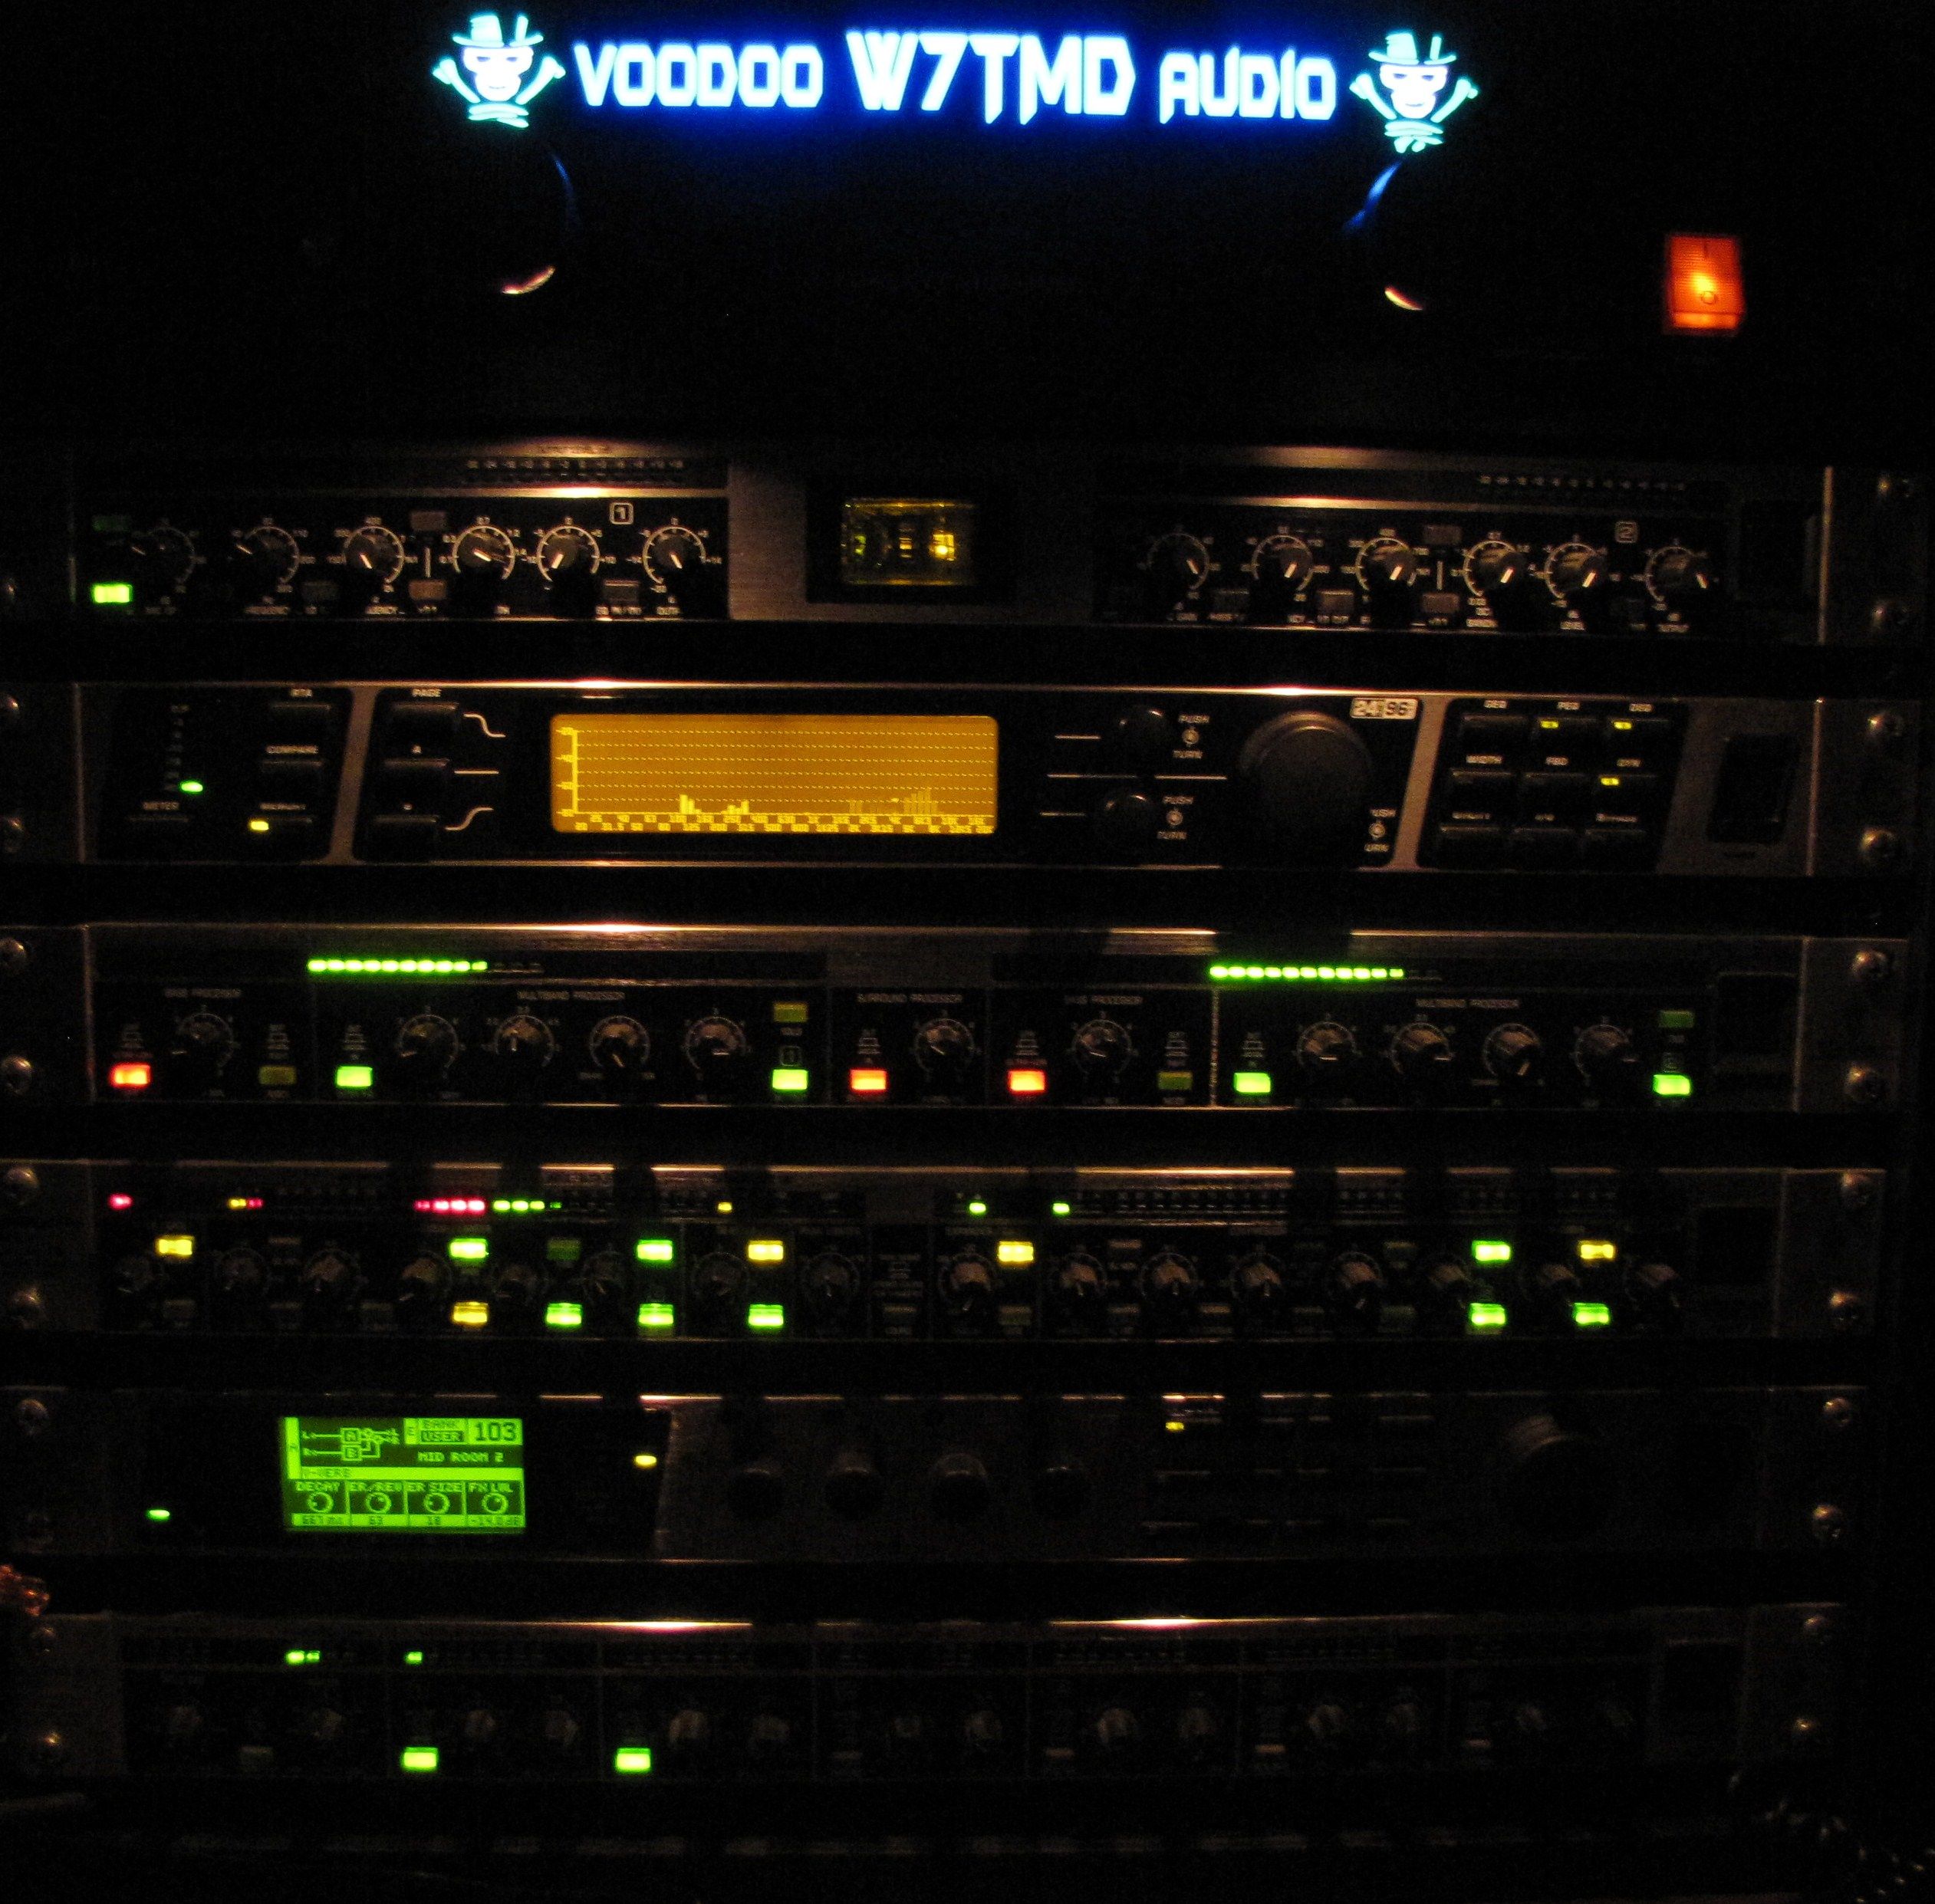 The W7TMD Voodoo Rack at Night!